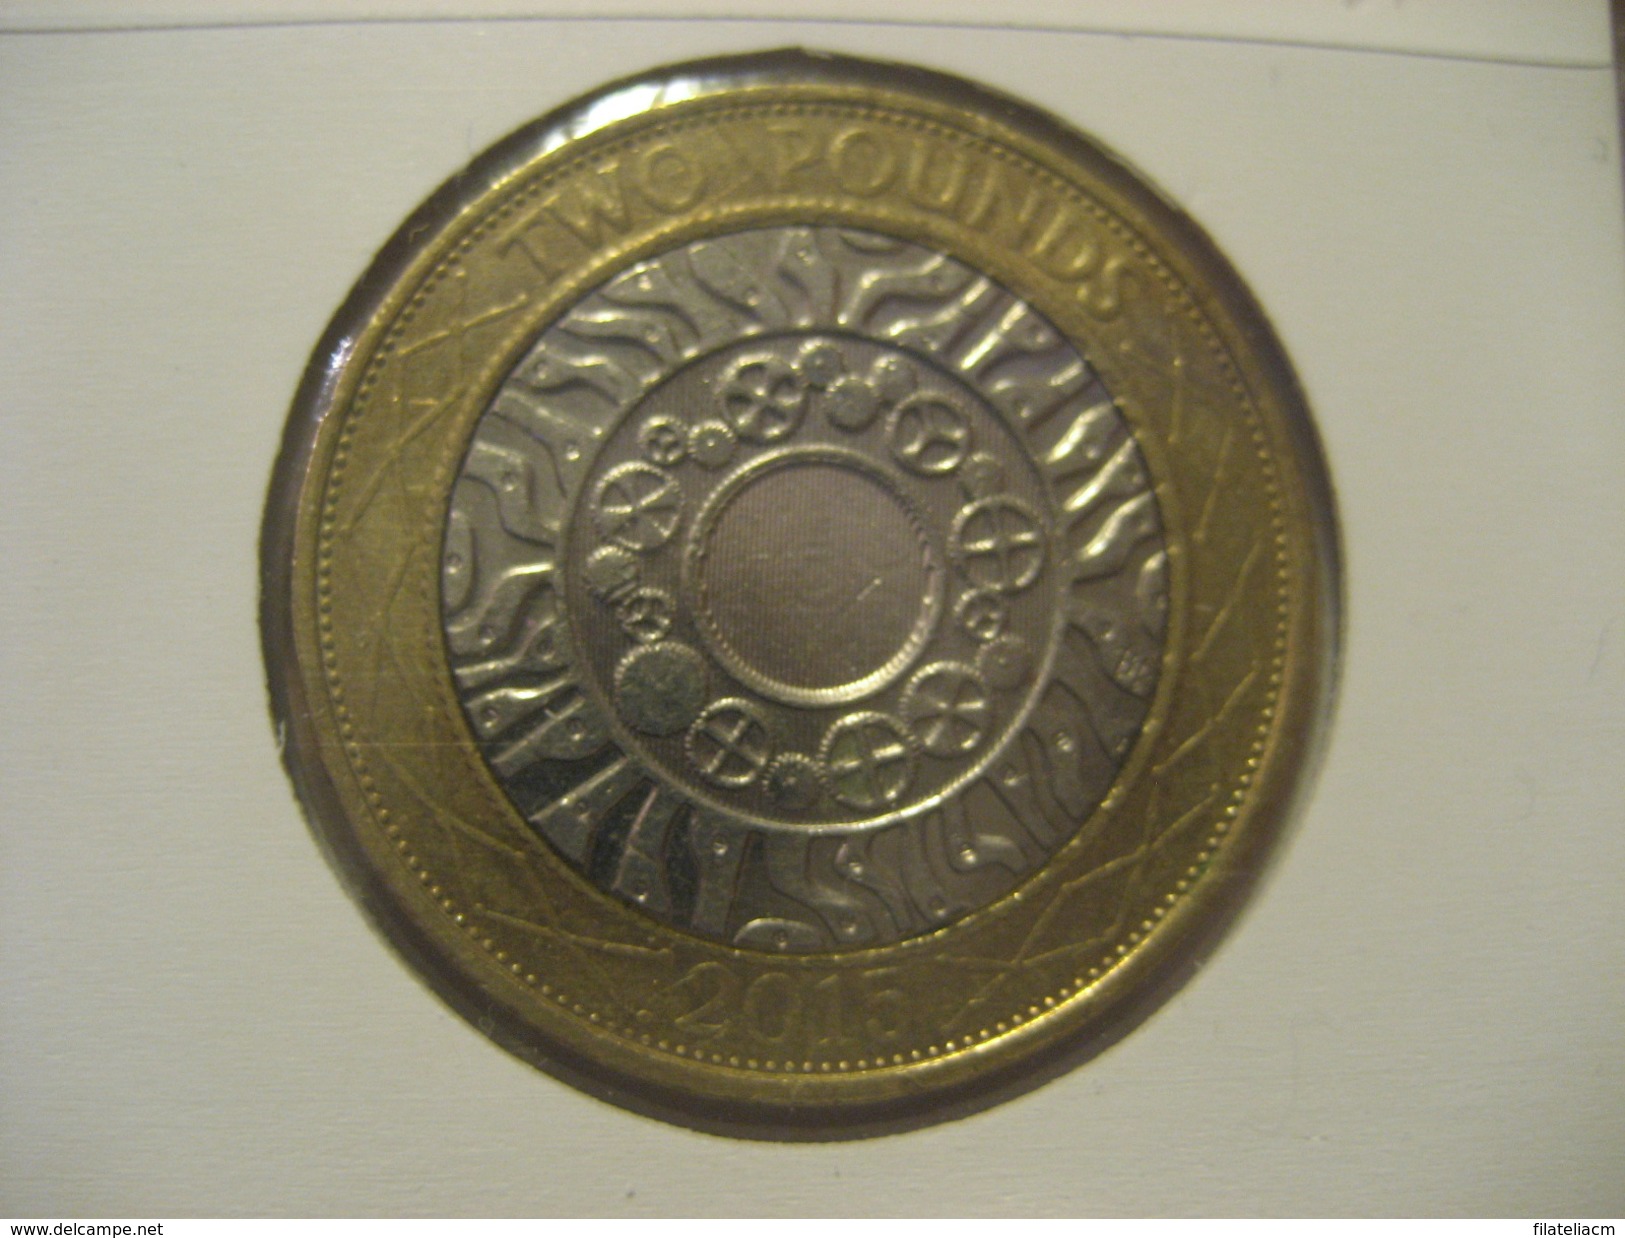 2 Pounds 2015 ENGLAND Great Britain QE II Good Condition Bimetallic Coin - 2 Pounds